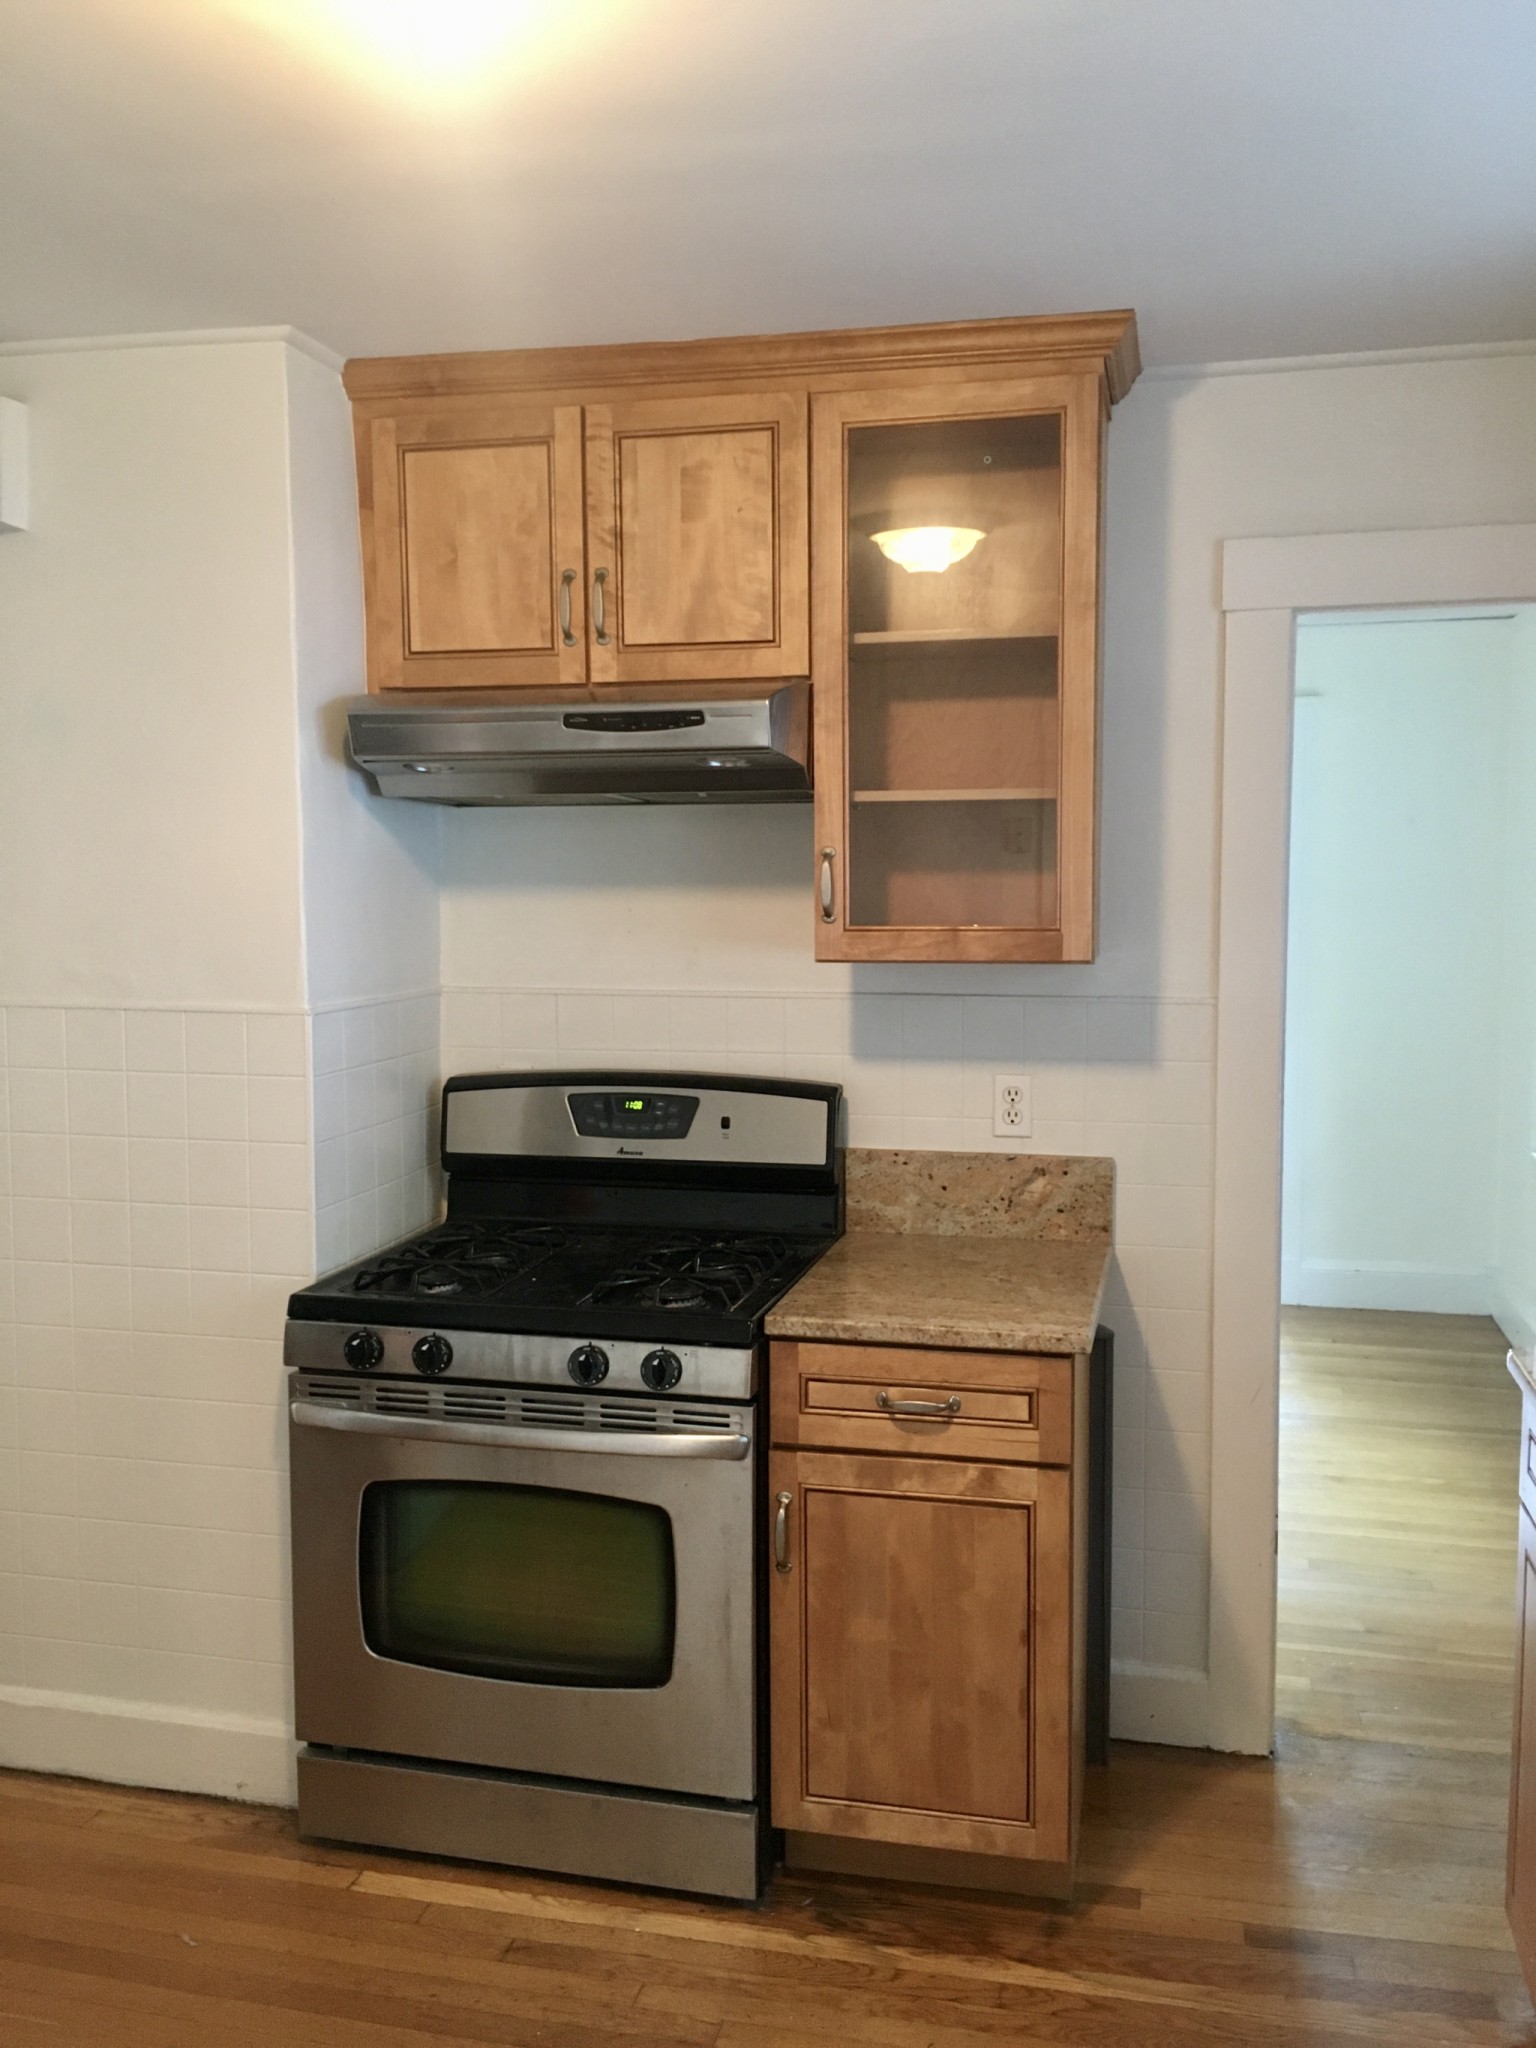 Photos of apartment on Langley Rd.,Newton MA 02459